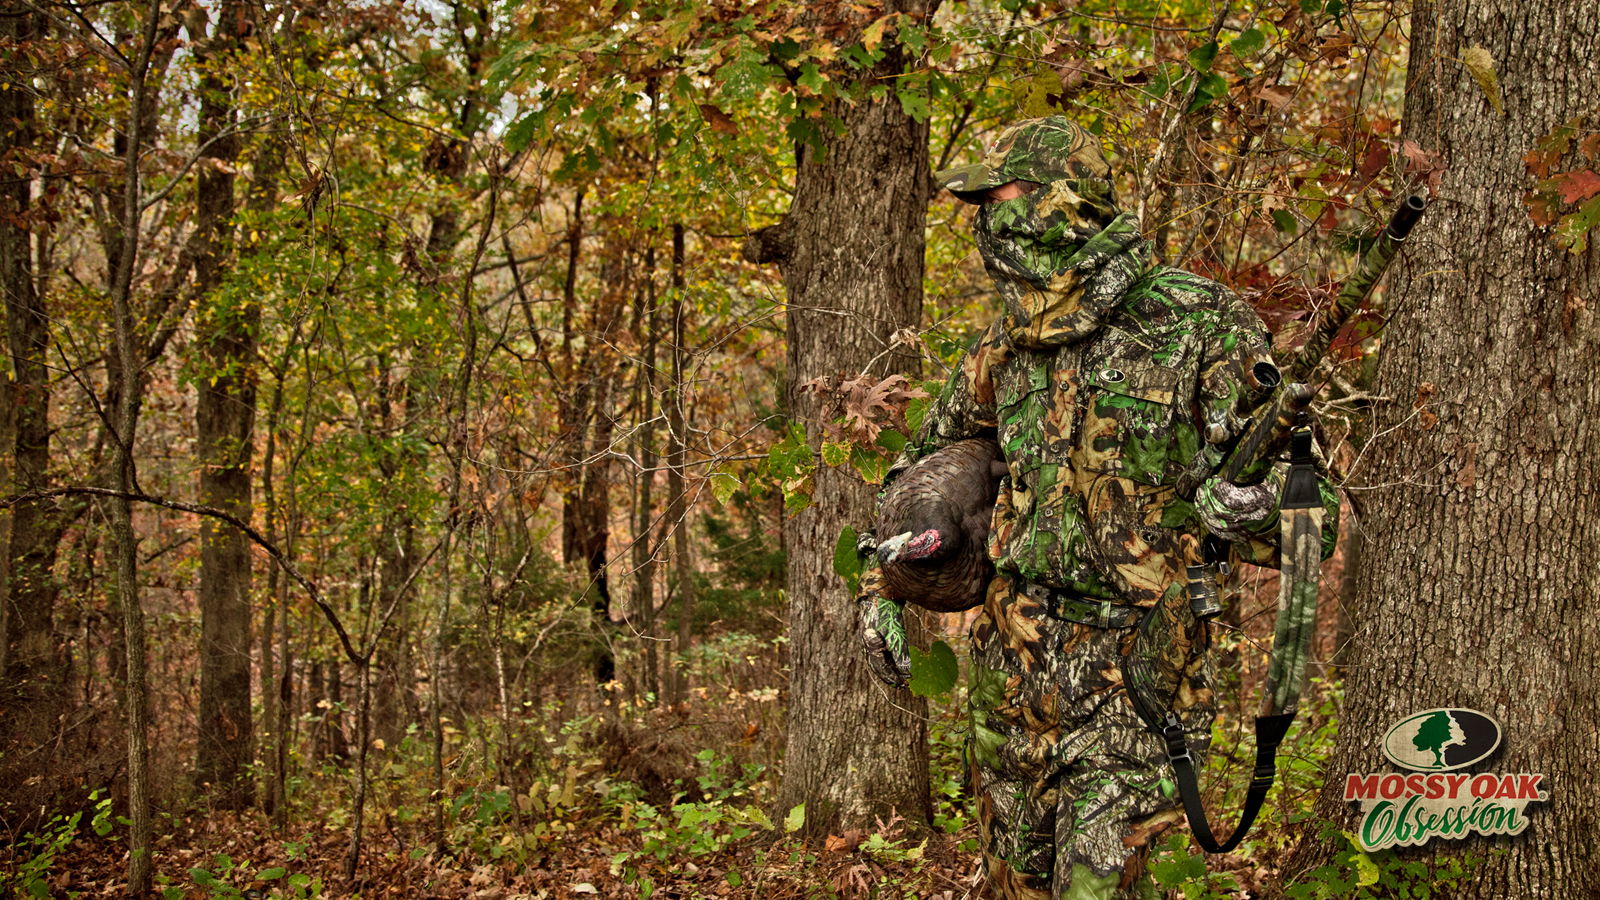 Hunting Camo Background Mossy Oak Wallpaper